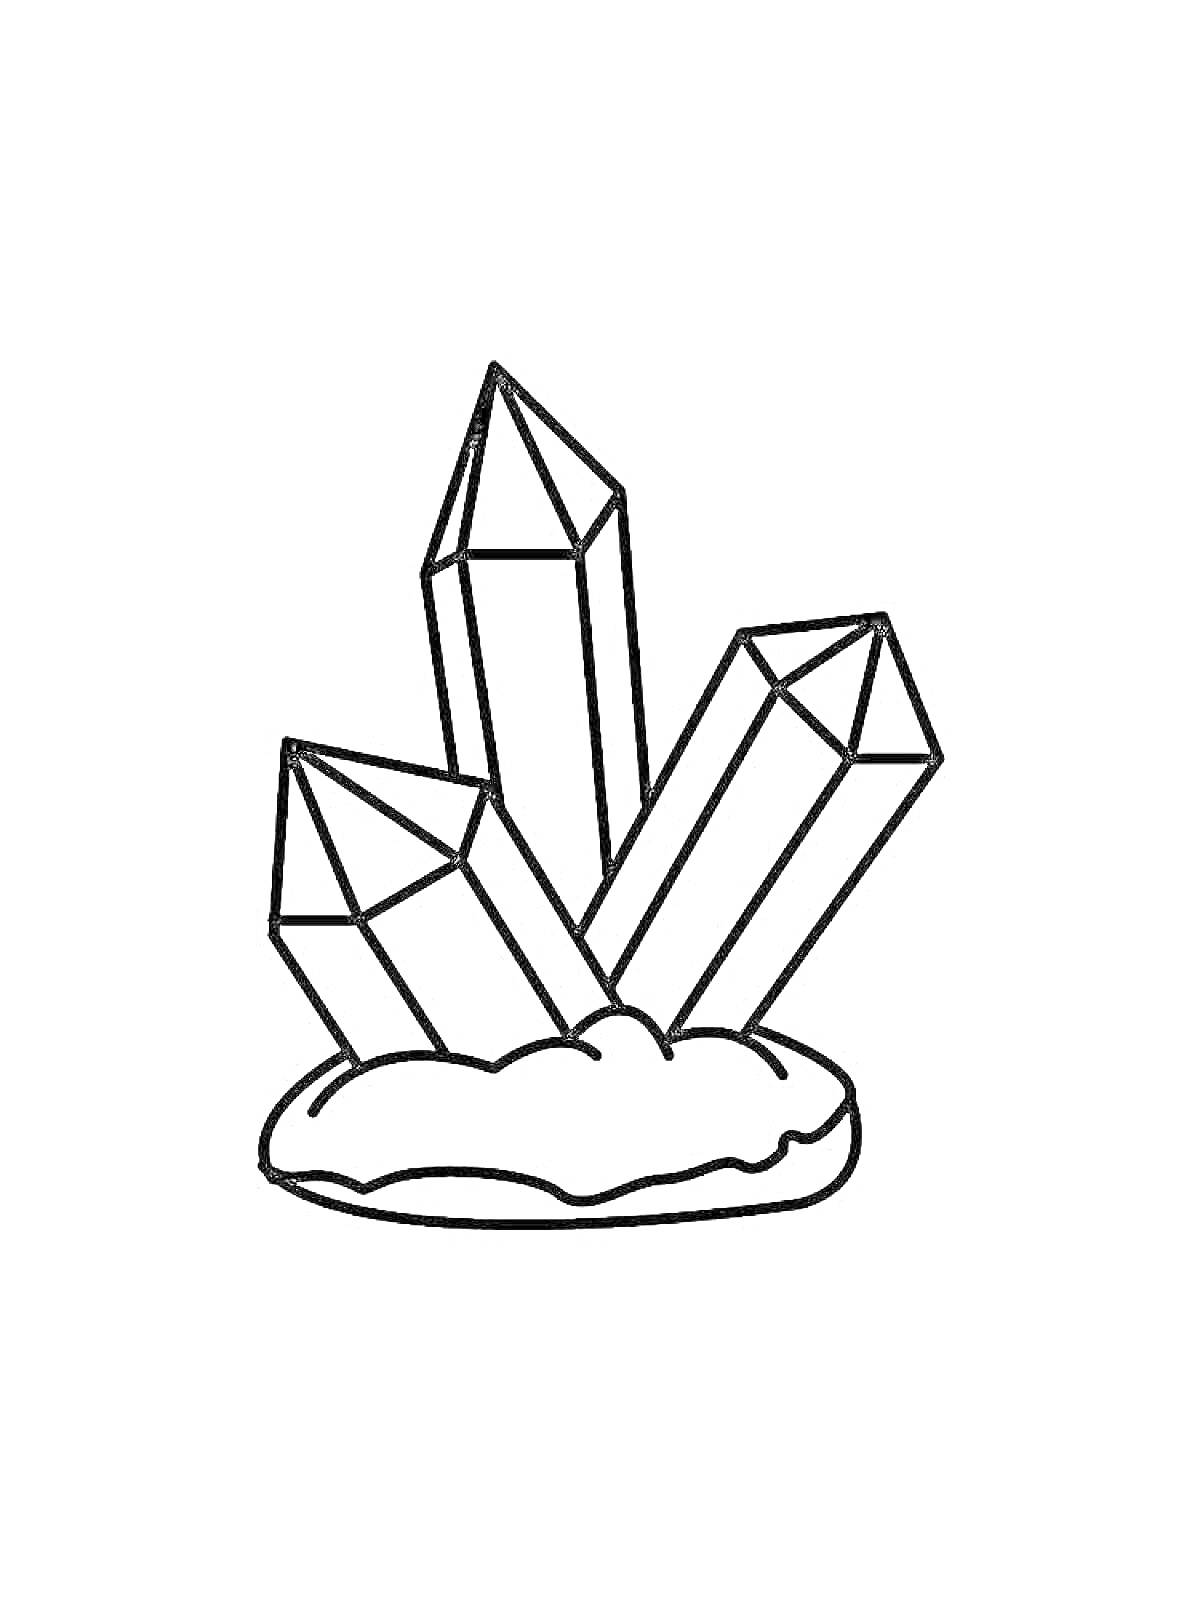 Три кристалла на куске породы